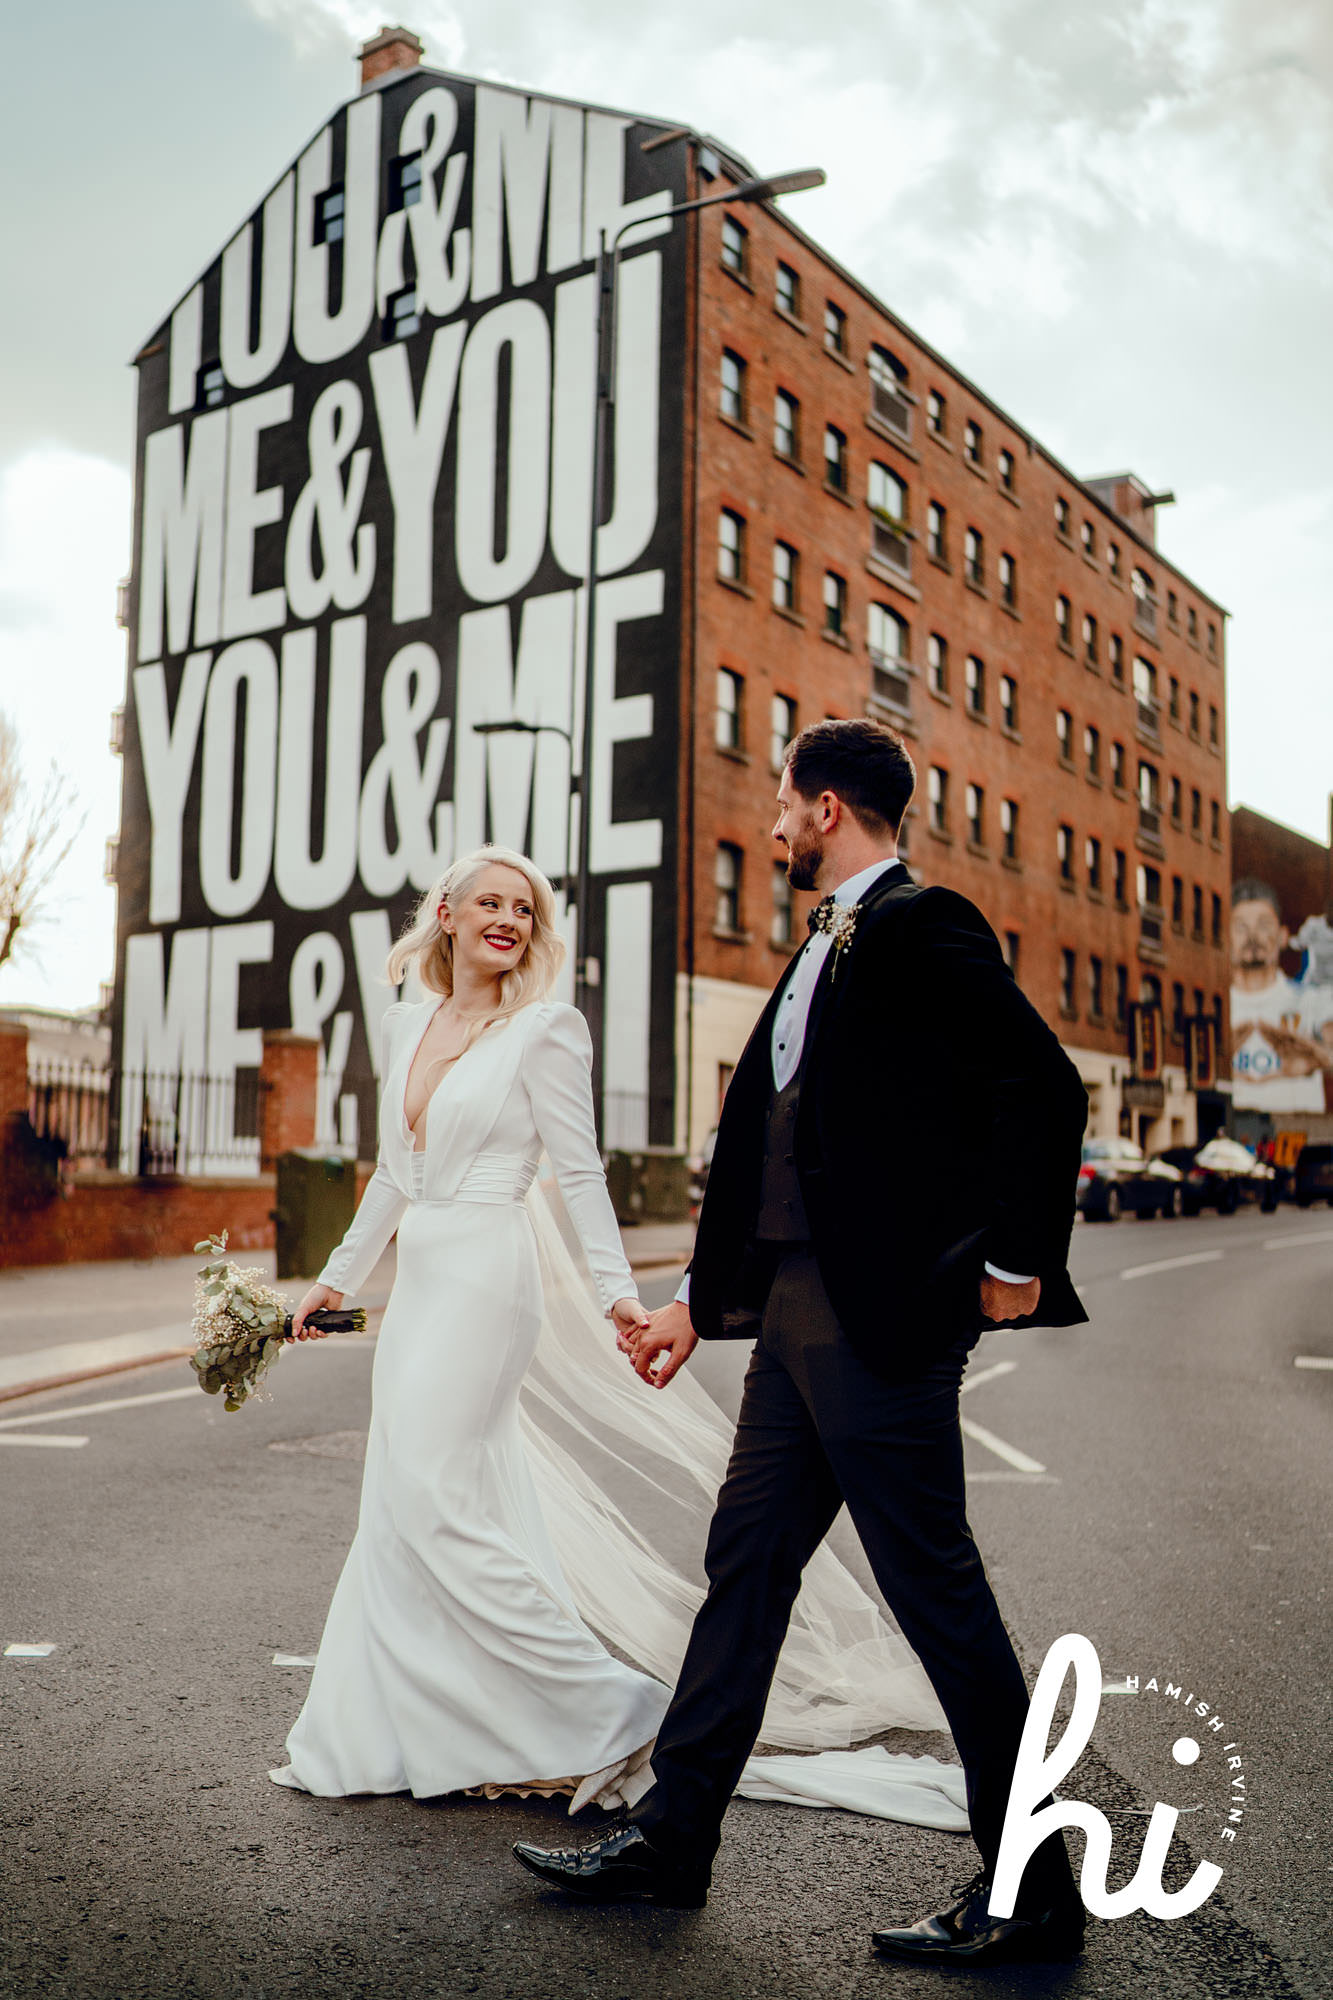 Me and You mural Leeds wedding Photography Hamish Irvine